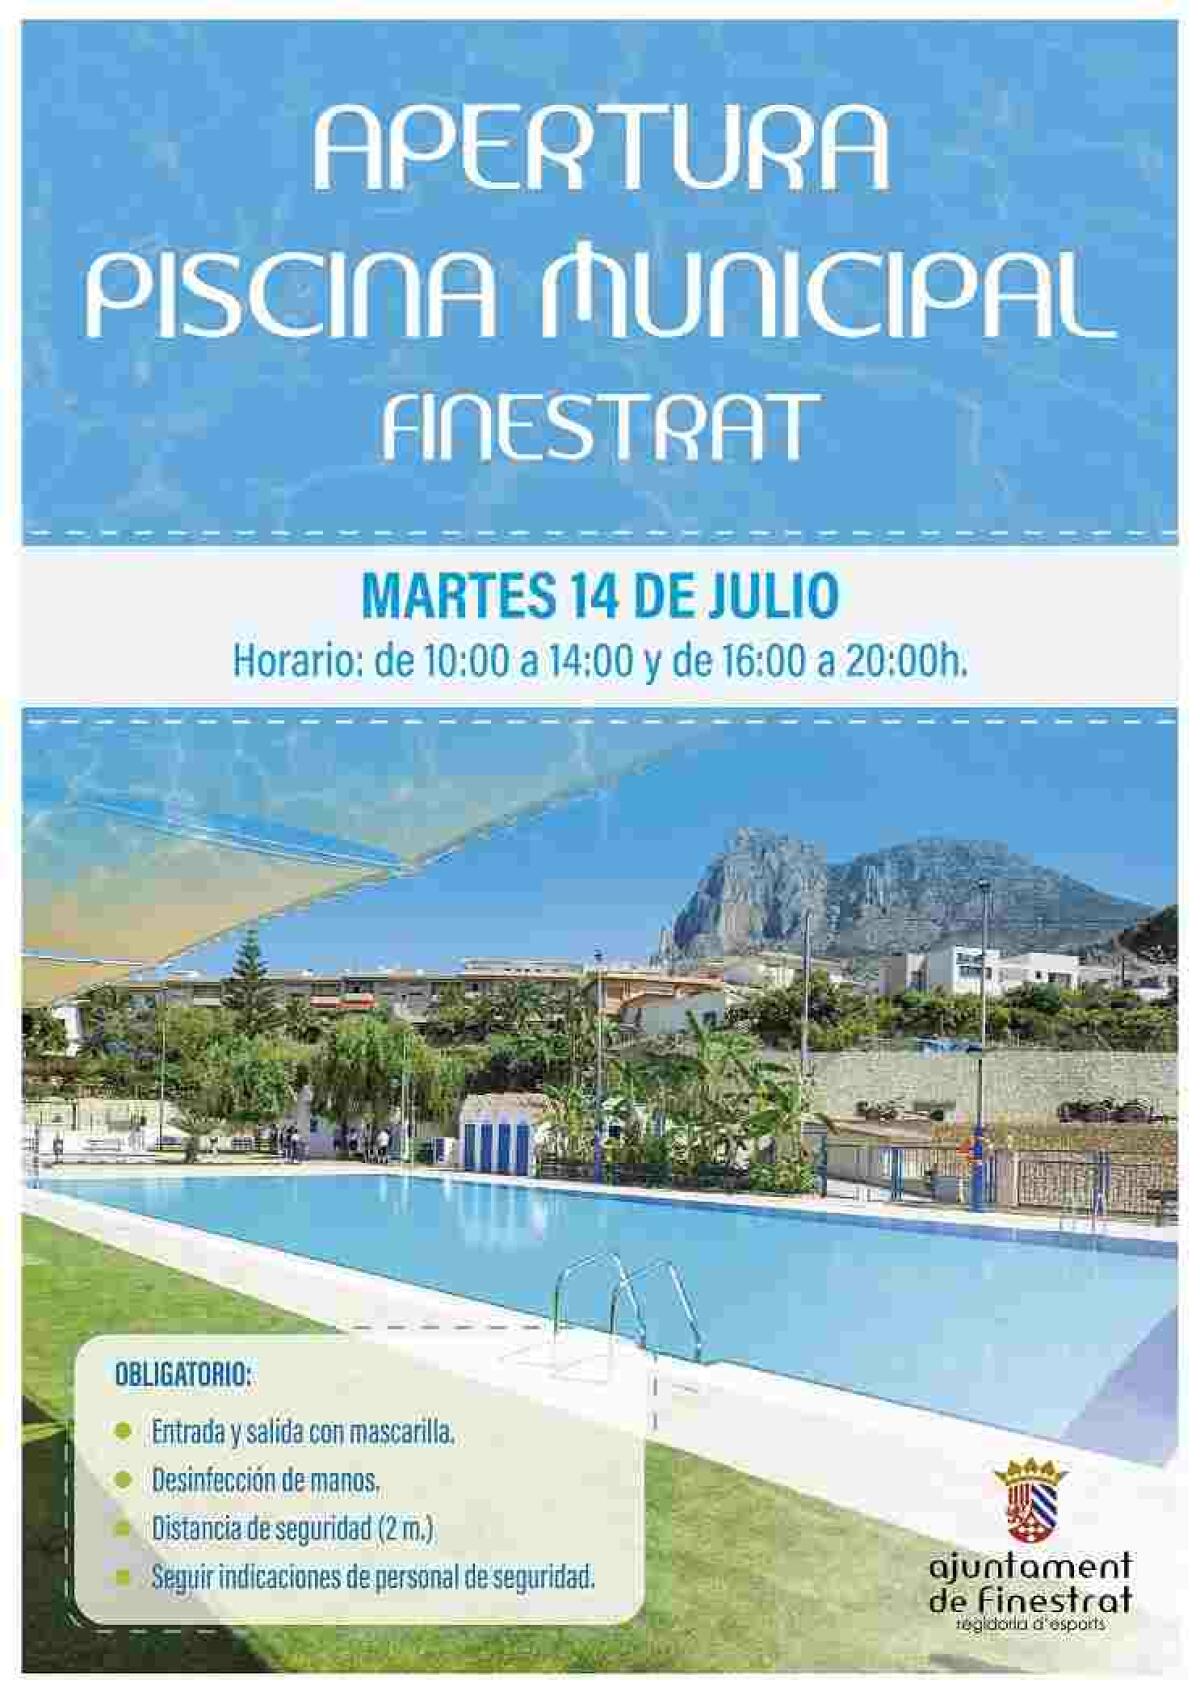 La piscina municipal de Finestrat abre mañana adaptada a las medidas de seguridad anti COVIT-19.